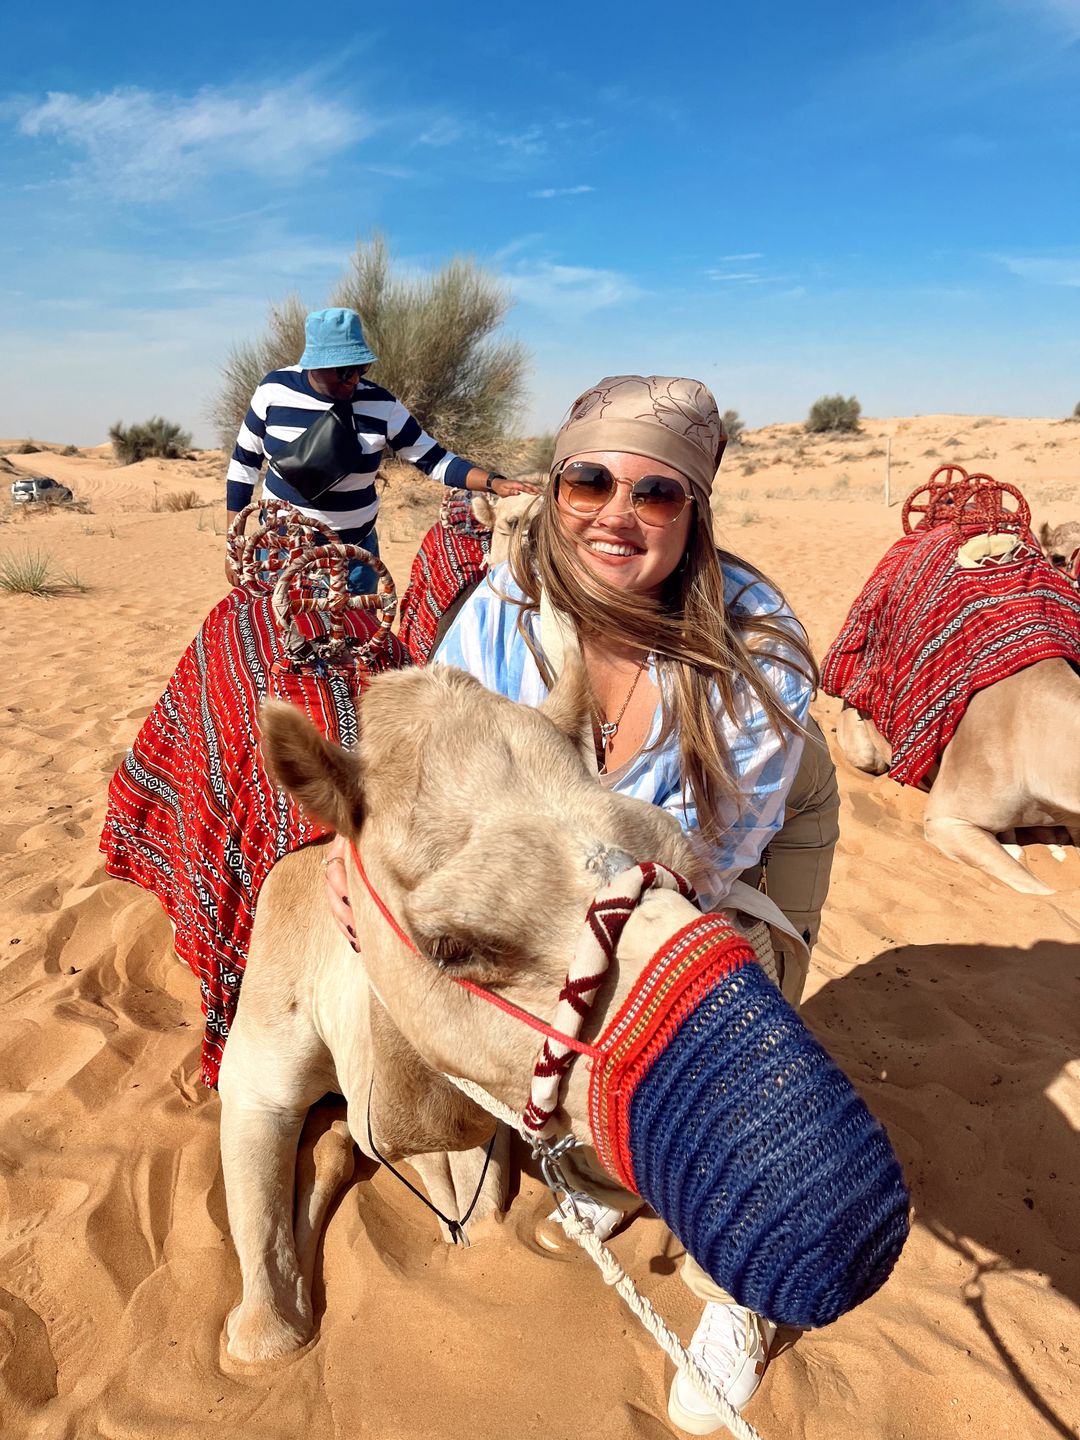 A lovely camel ride experience in the Dubai desert